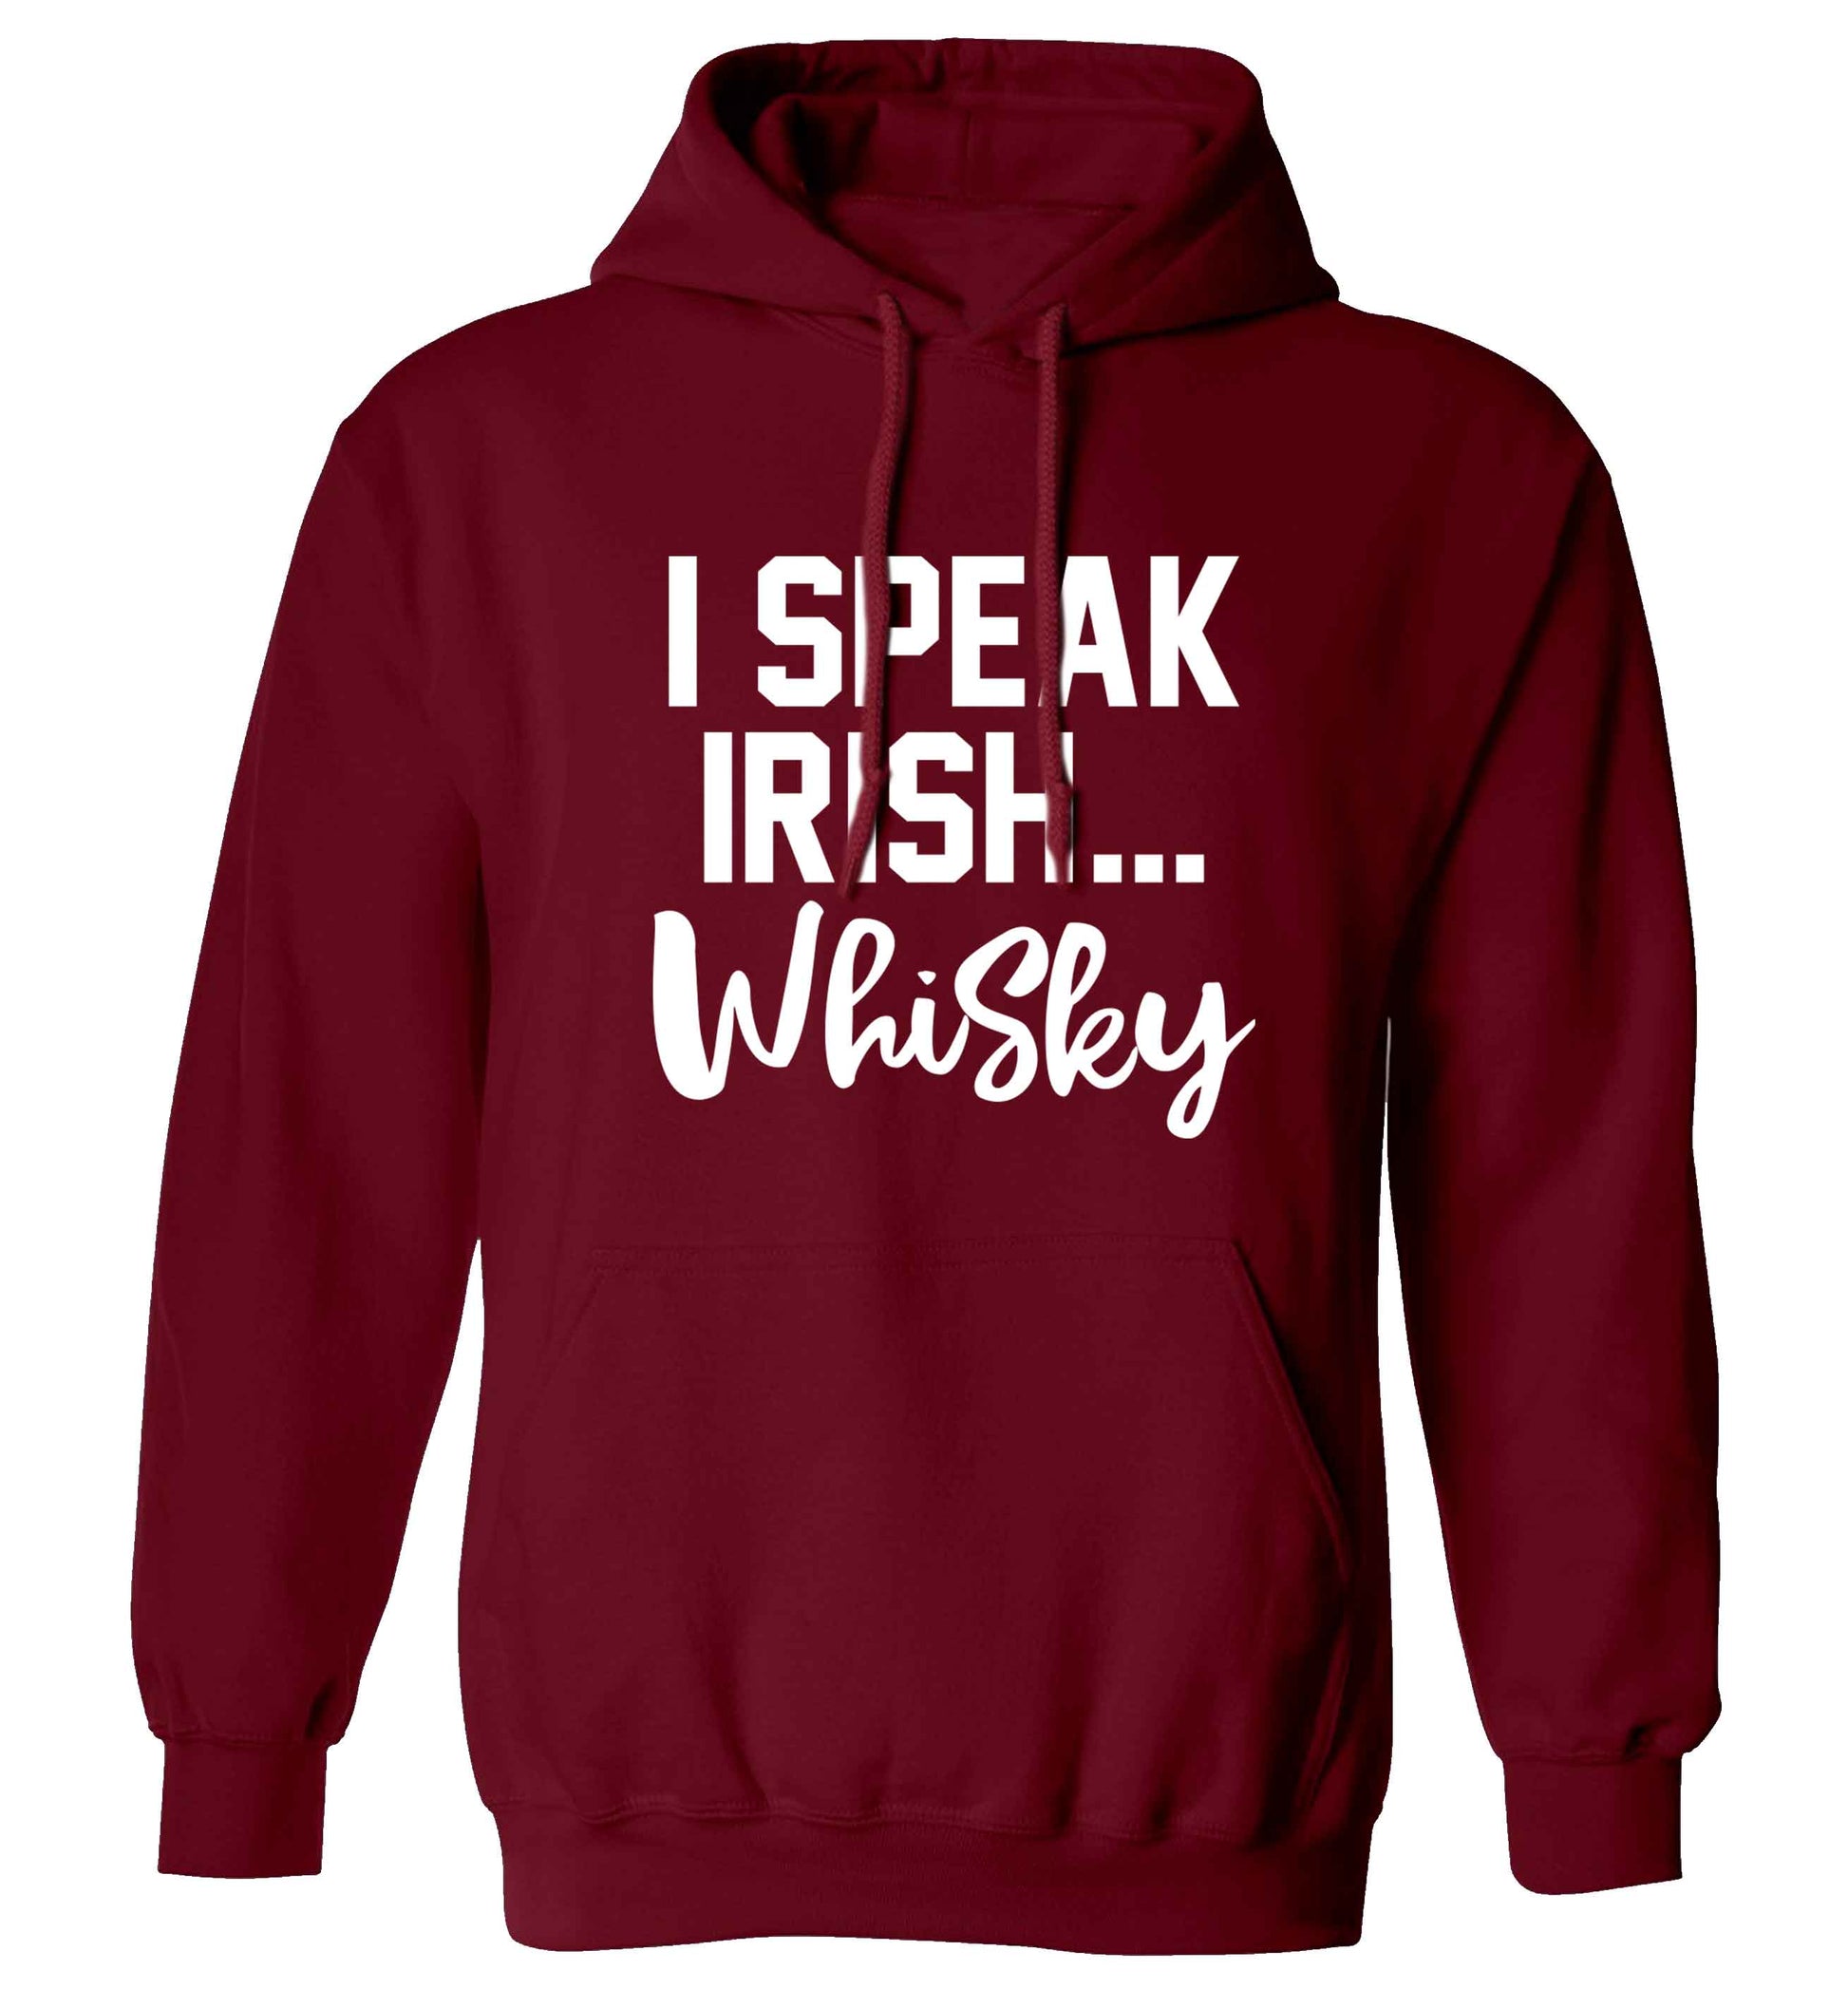 I speak Irish whisky adults unisex maroon hoodie 2XL